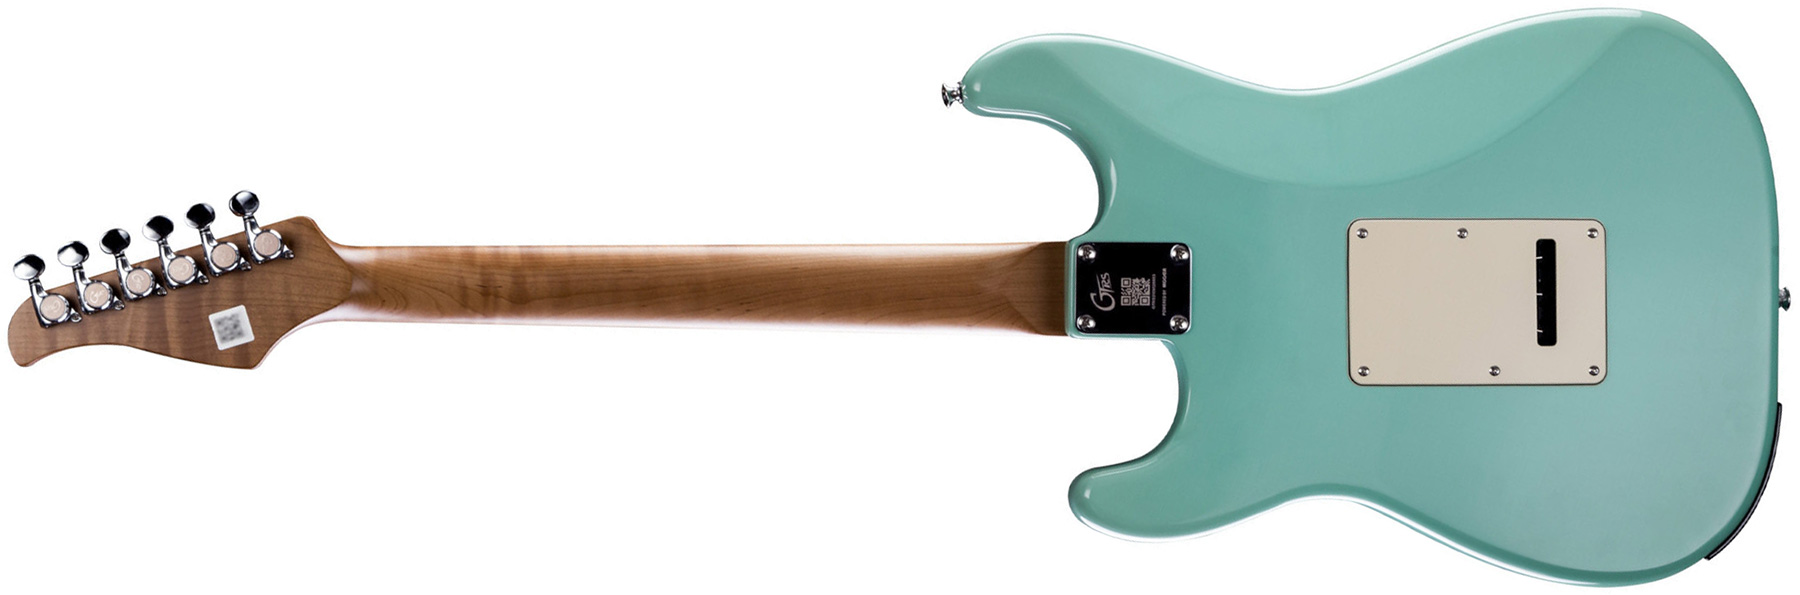 Mooer Gtrs P800 Pro Intelligent Guitar Hss Trem Rw - Mint Green - MIDI / Digital elektrische gitaar - Variation 1